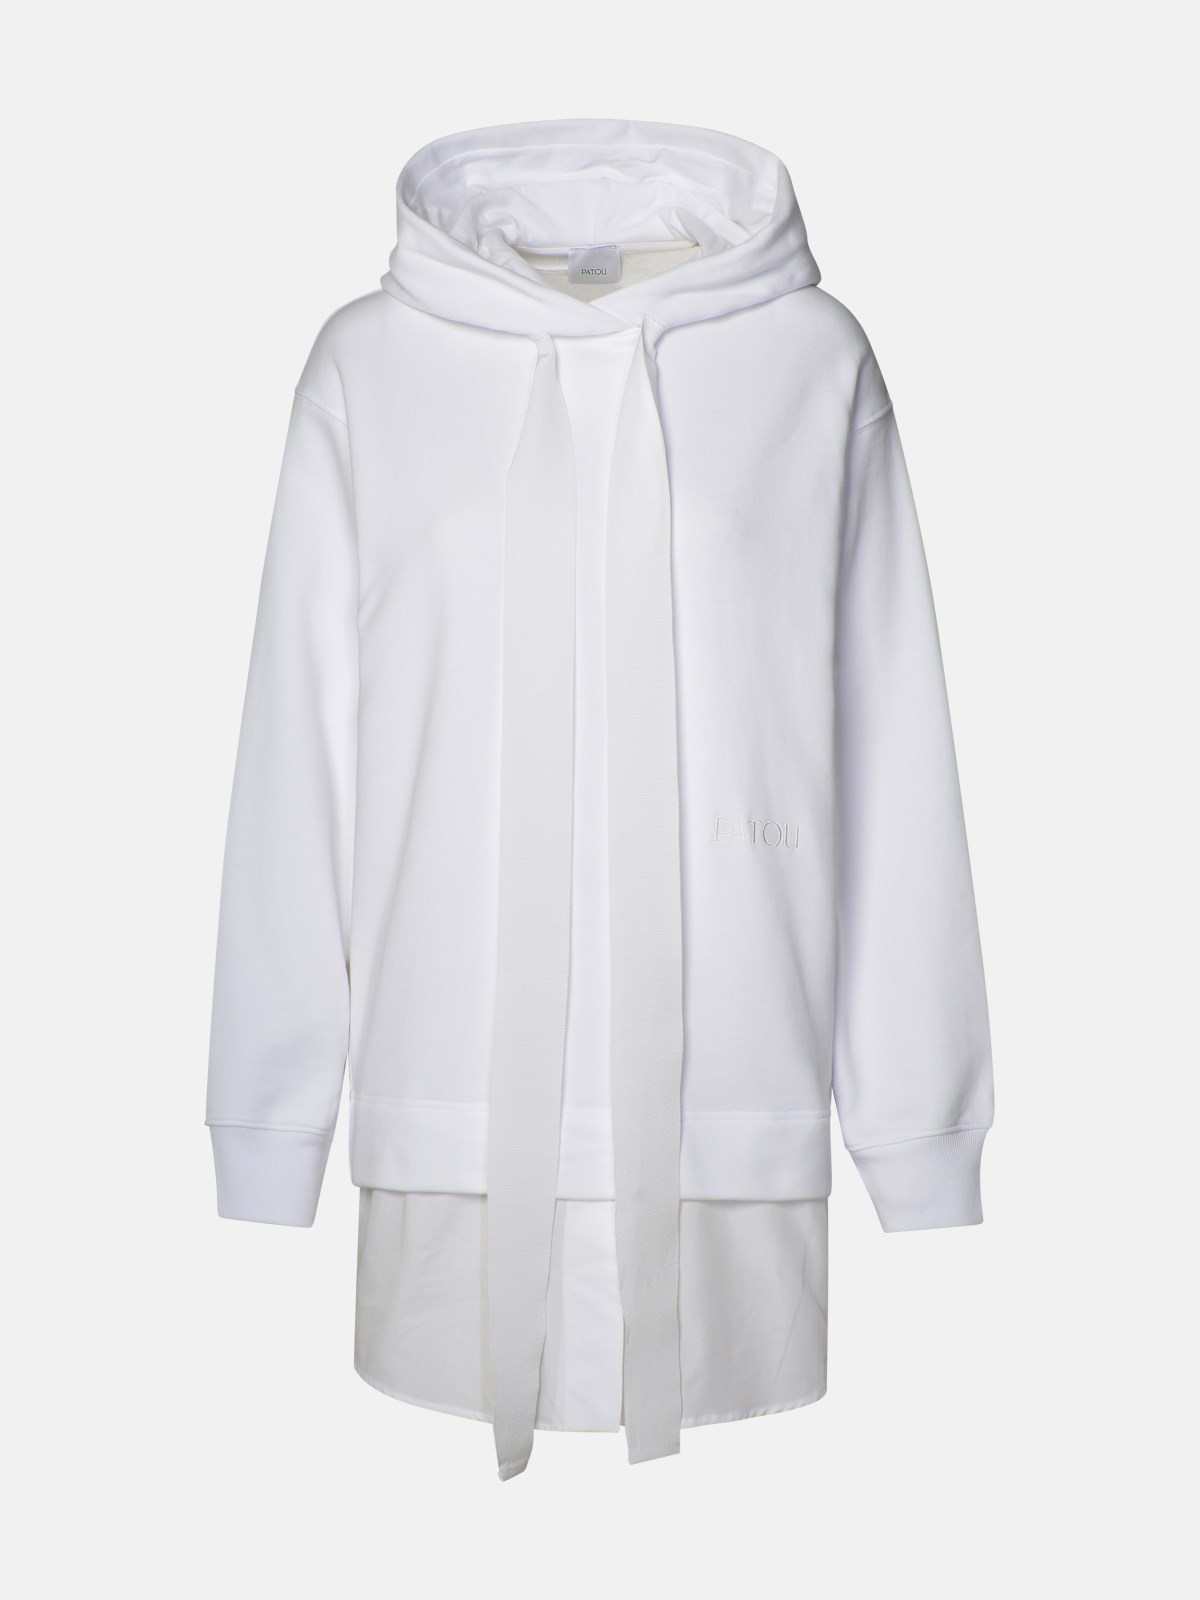 Patou White Cotton Sweatshirt